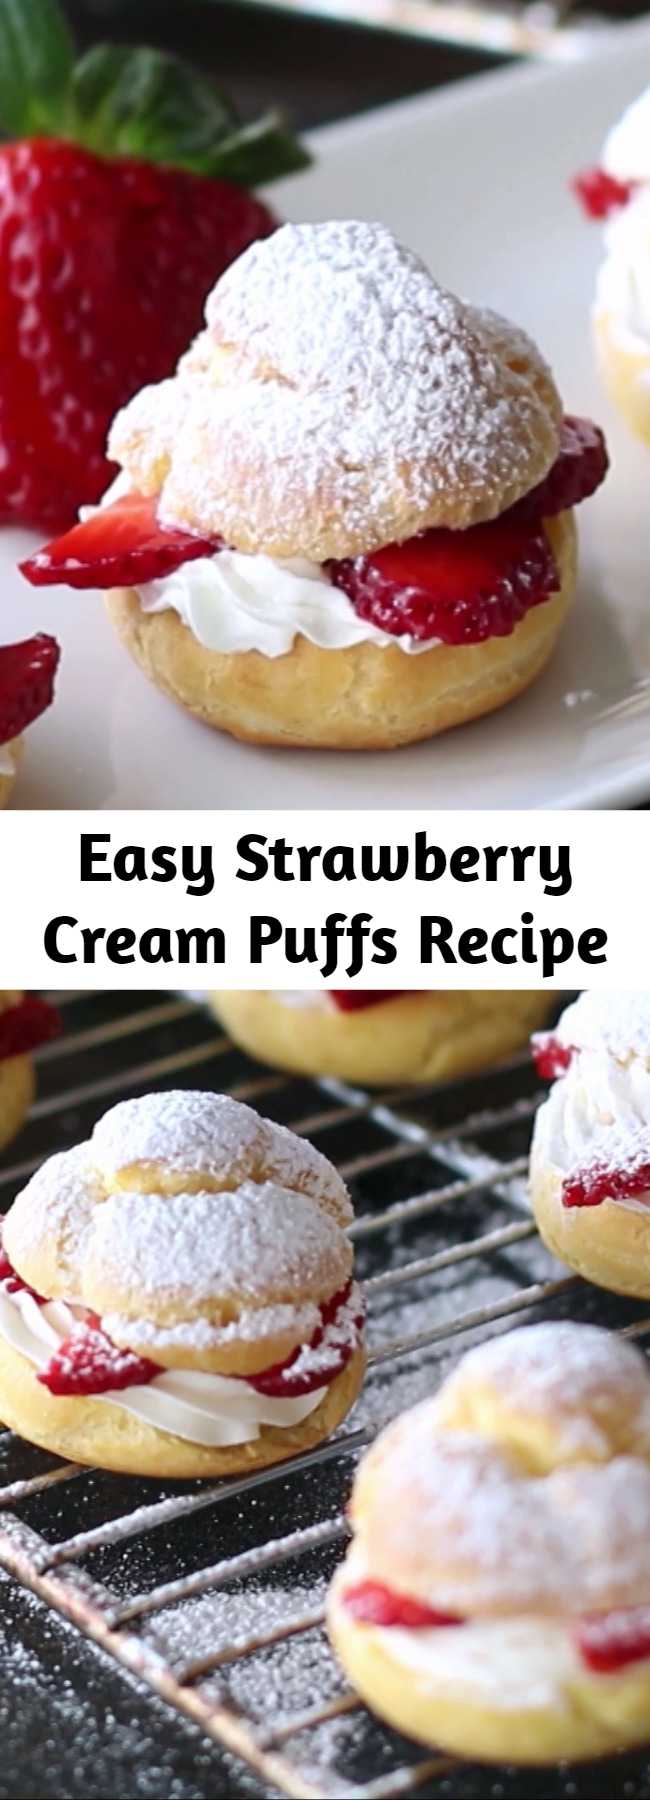 Easy Strawberry Cream Puffs Recipe - Strawberry and cream puffs guaranteed to please.